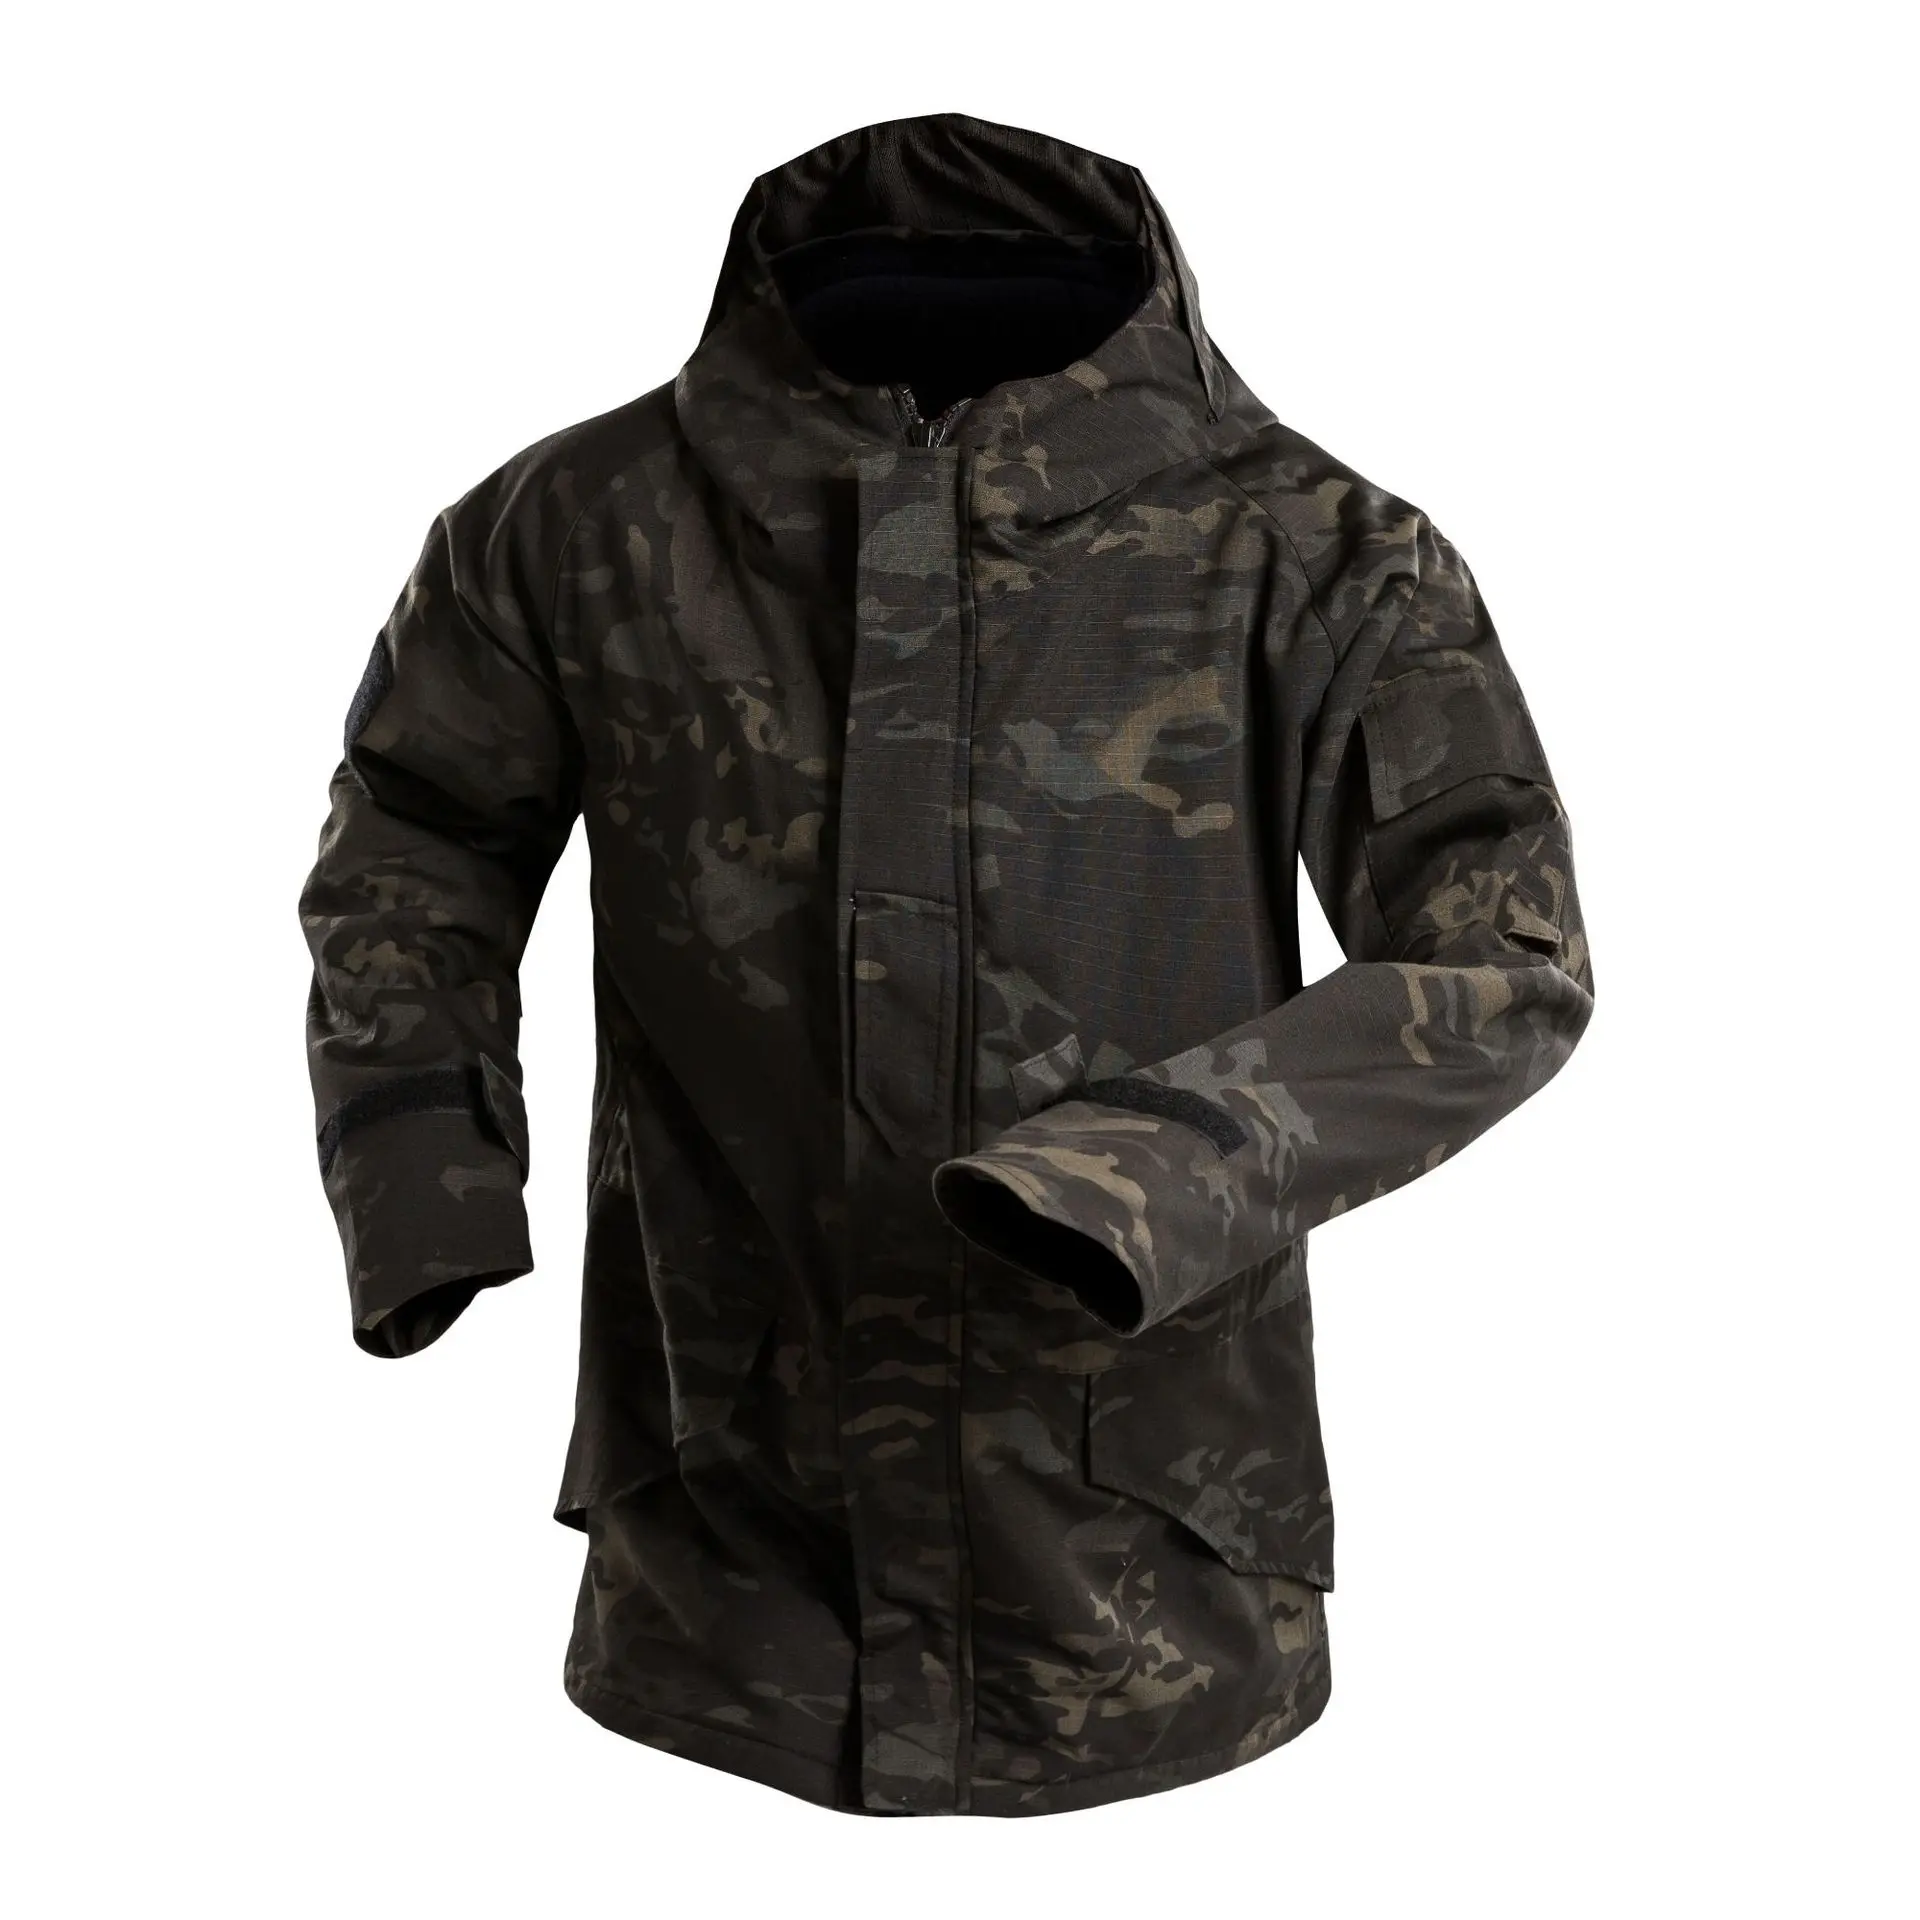 G8 Tactical Jacket Windbreaker Waterproof Warm Fleece Hooded Coat Outdoor Hiking Hunting Clothes Camouflage Army Military Jacket